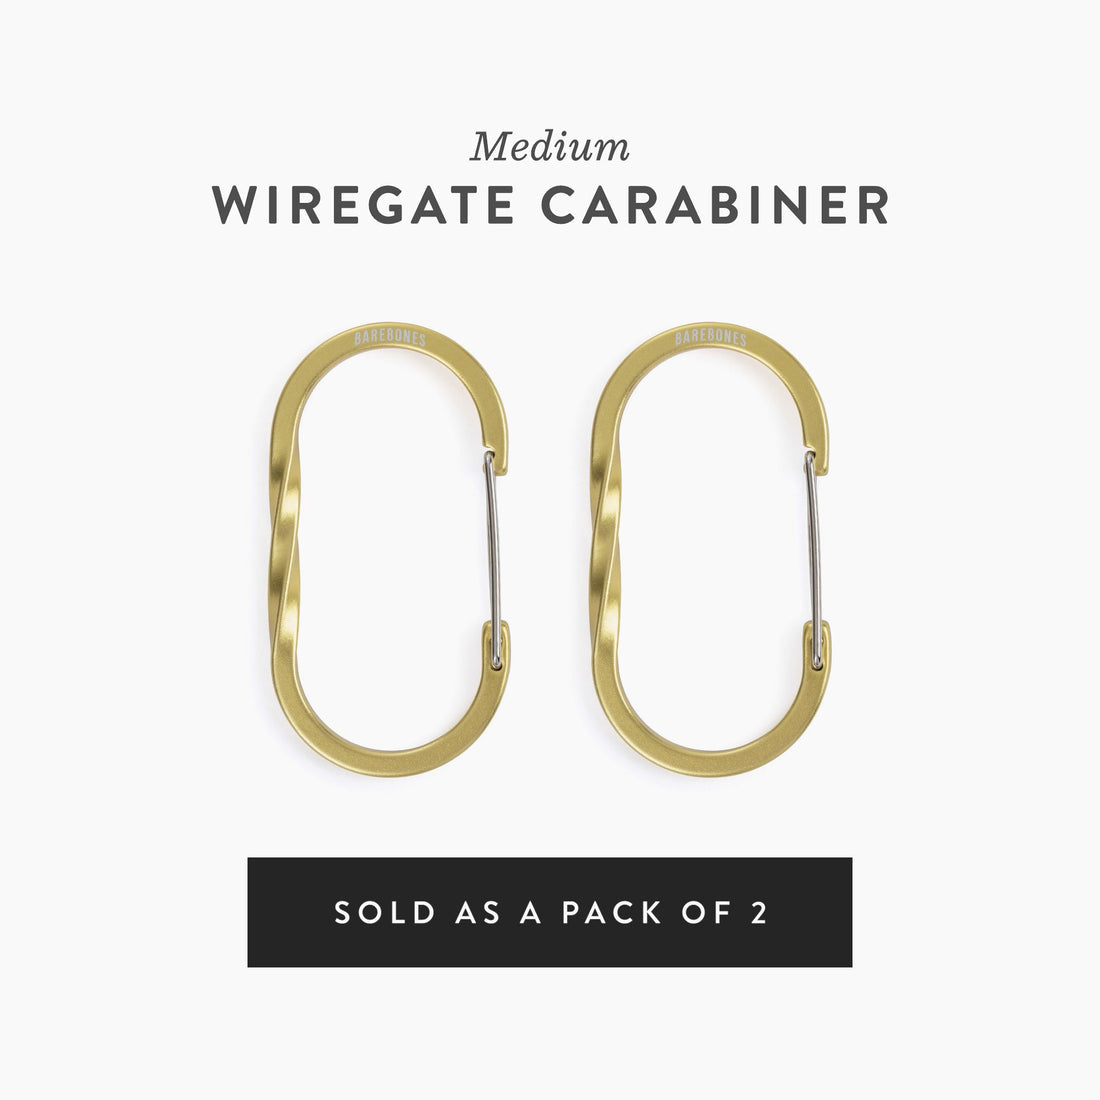 WIREGATE CARABINER - Medium